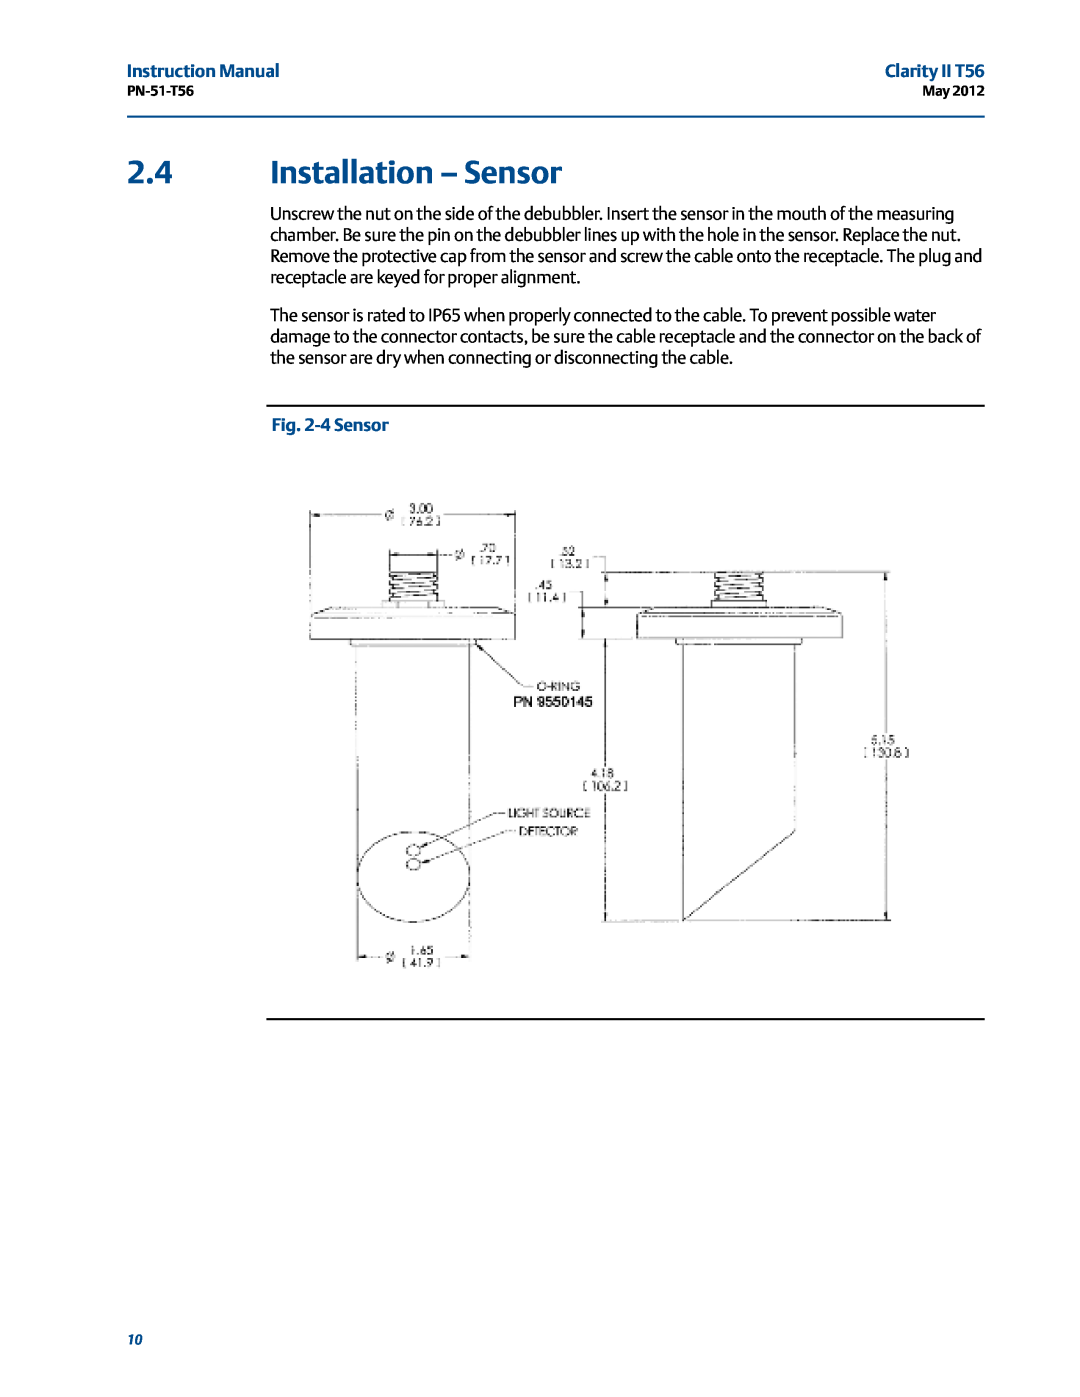 Emerson PN-51-T56 instruction manual Installation - Sensor, 4 Sensor 